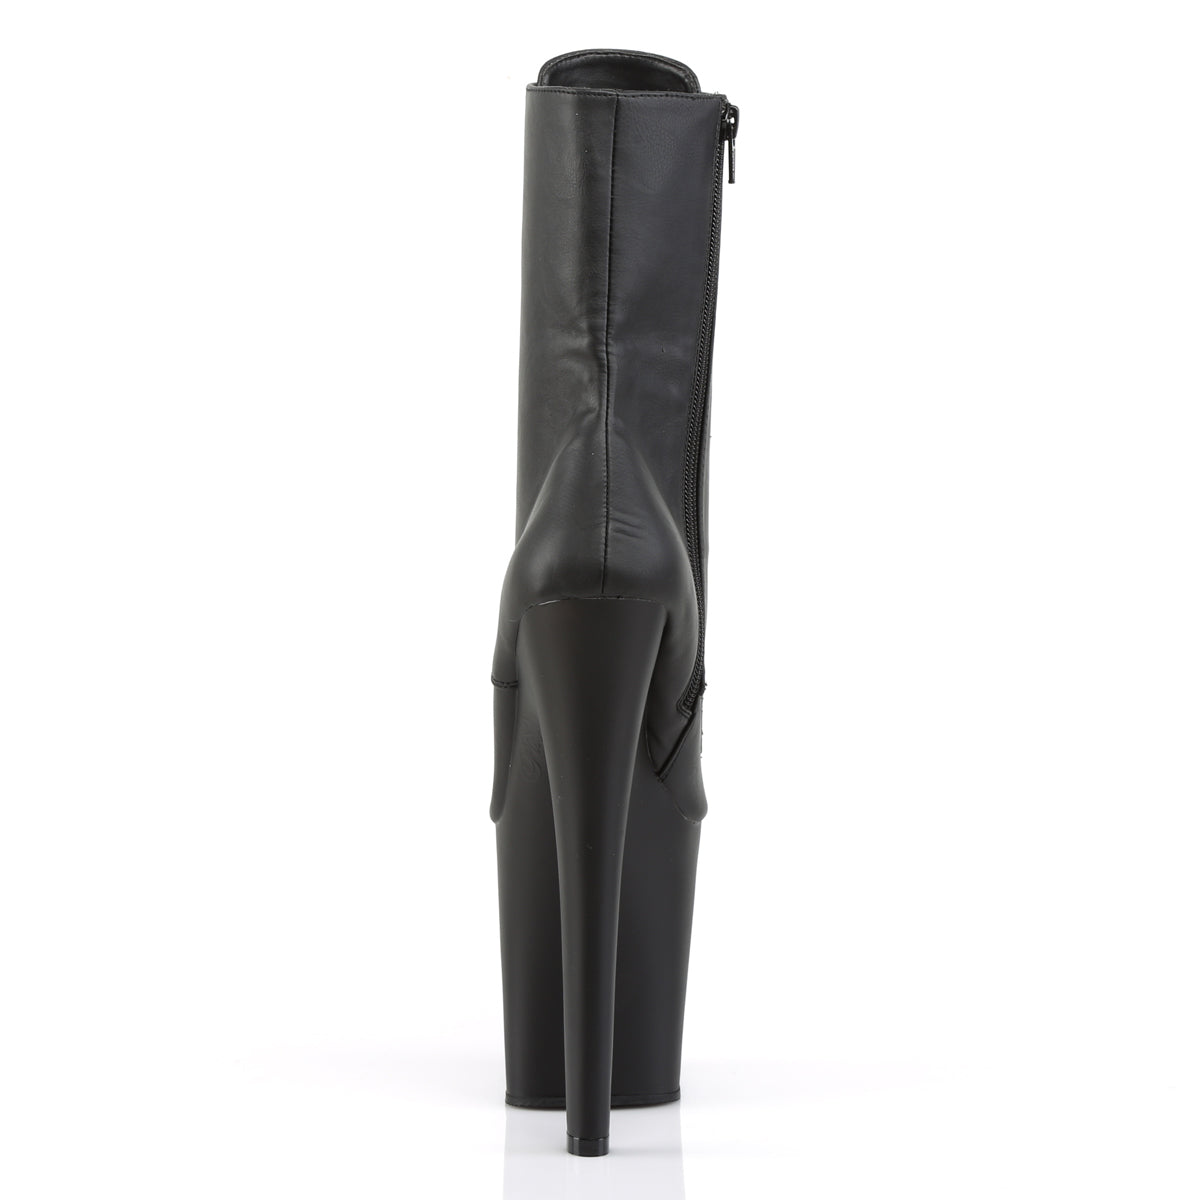 XTREME-1020 8" Heel Black Pole Dancing Platforms Shoes-Pleaser- Sexy Shoes Fetish Footwear